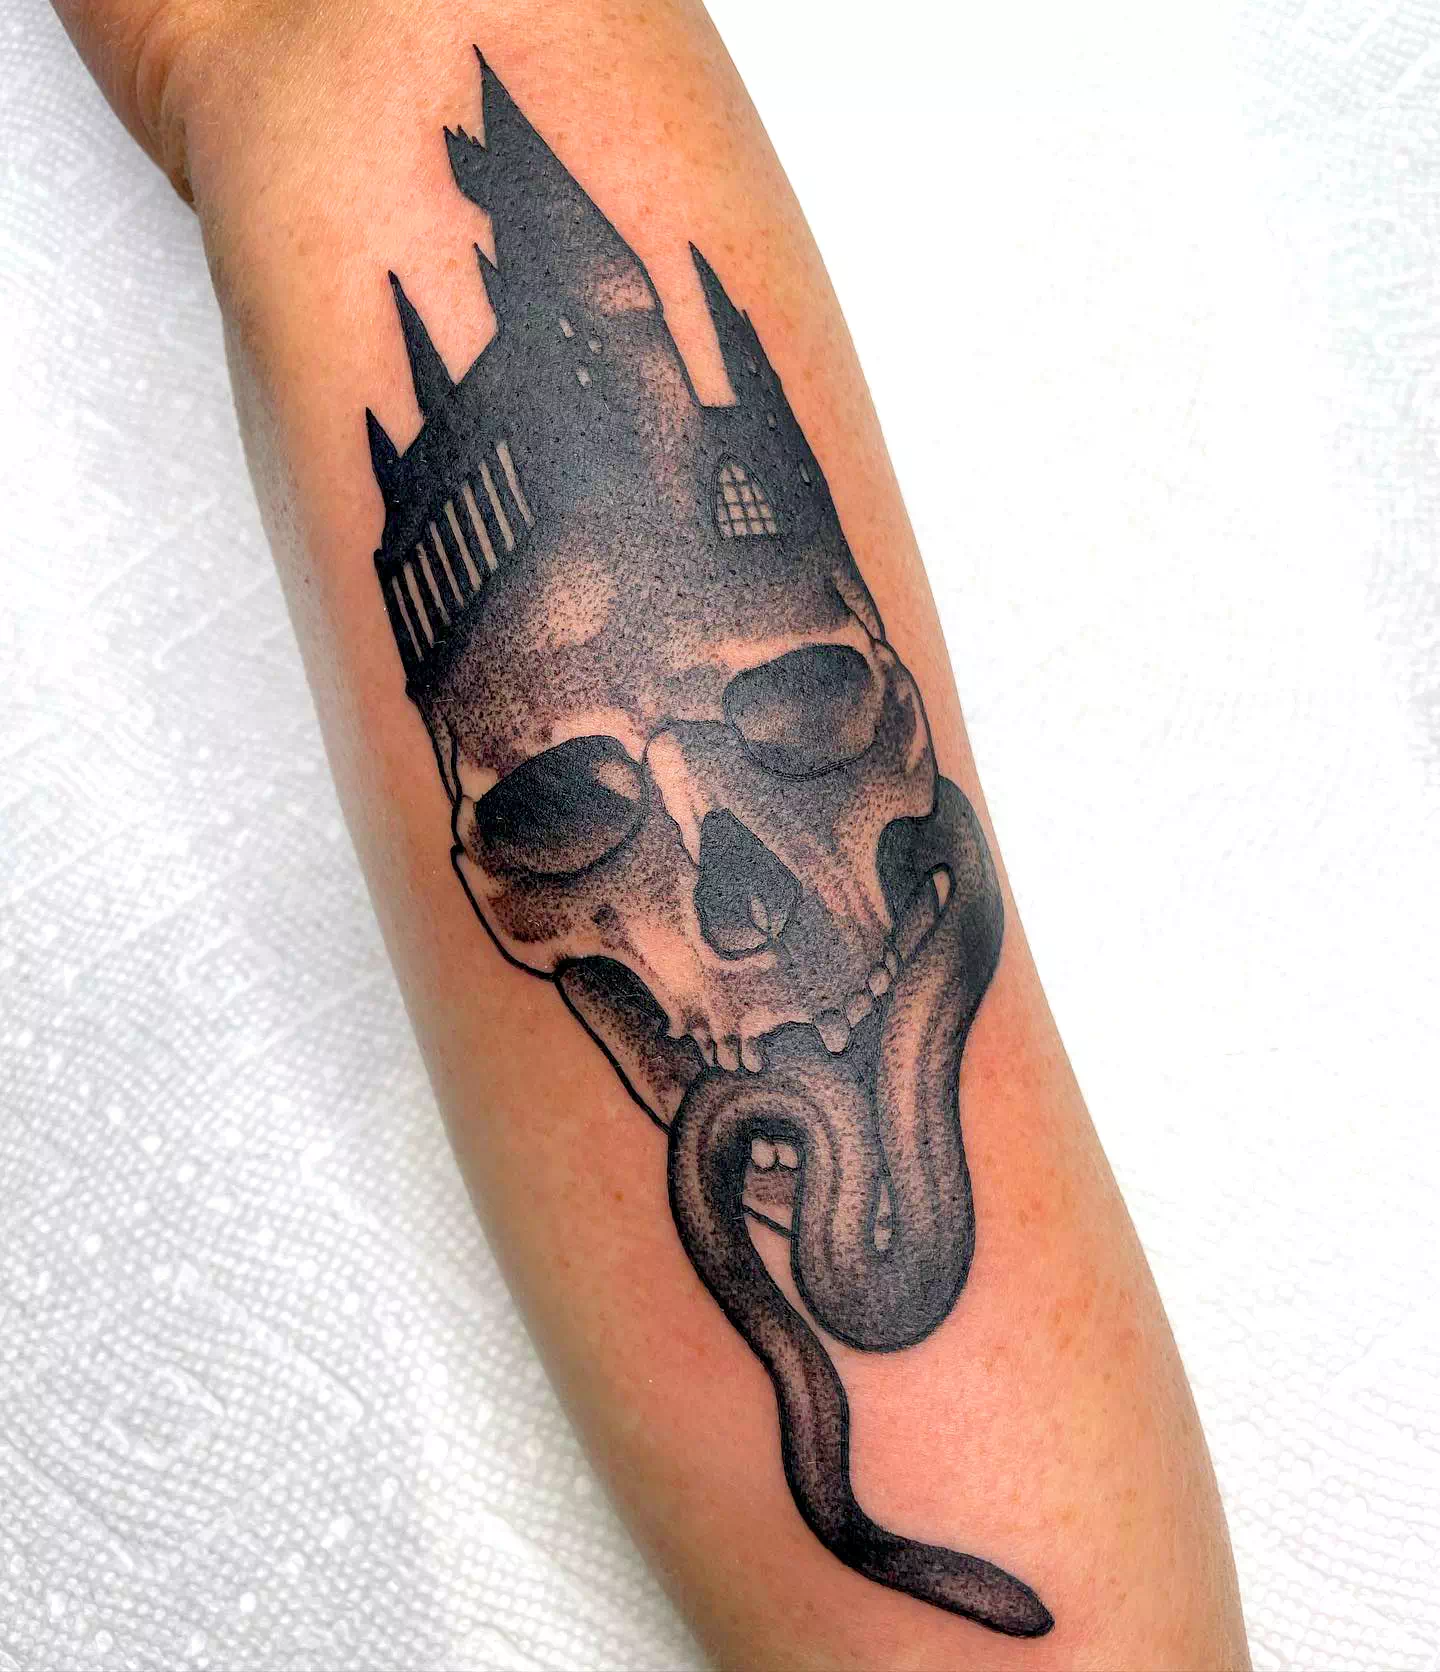 Tatuaje de un Mortífago